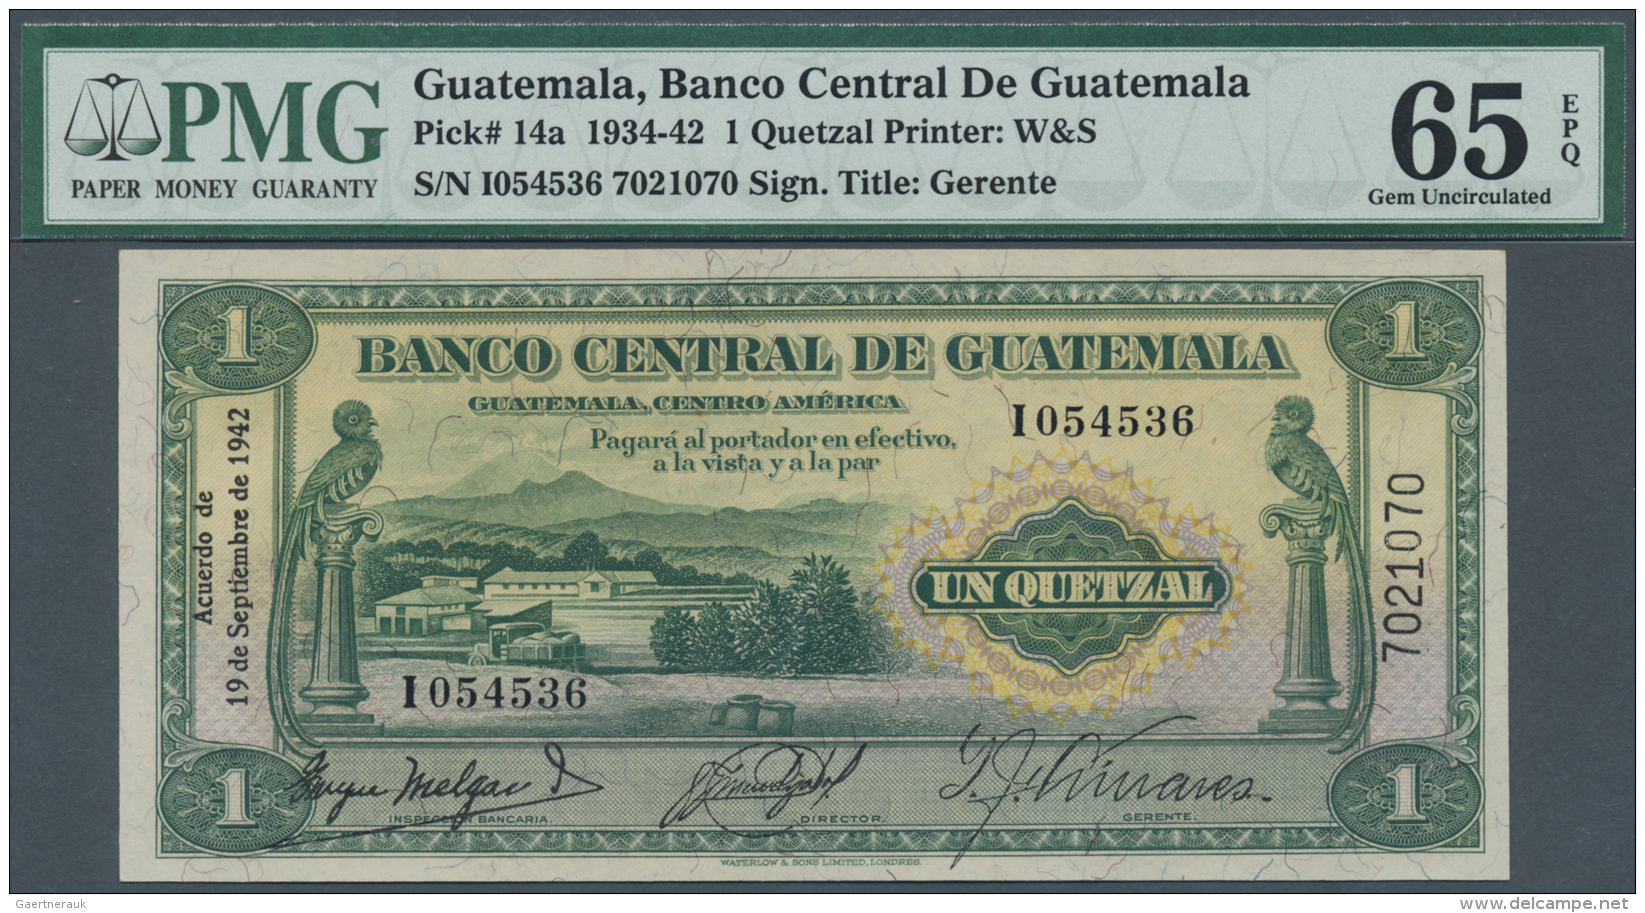 Guatemala: Banco Central De Guatemala 1 Quetzal September 19th 1942, P.14a In Perfect Condition, PMG Graded 65 Gem Uncir - Guatemala